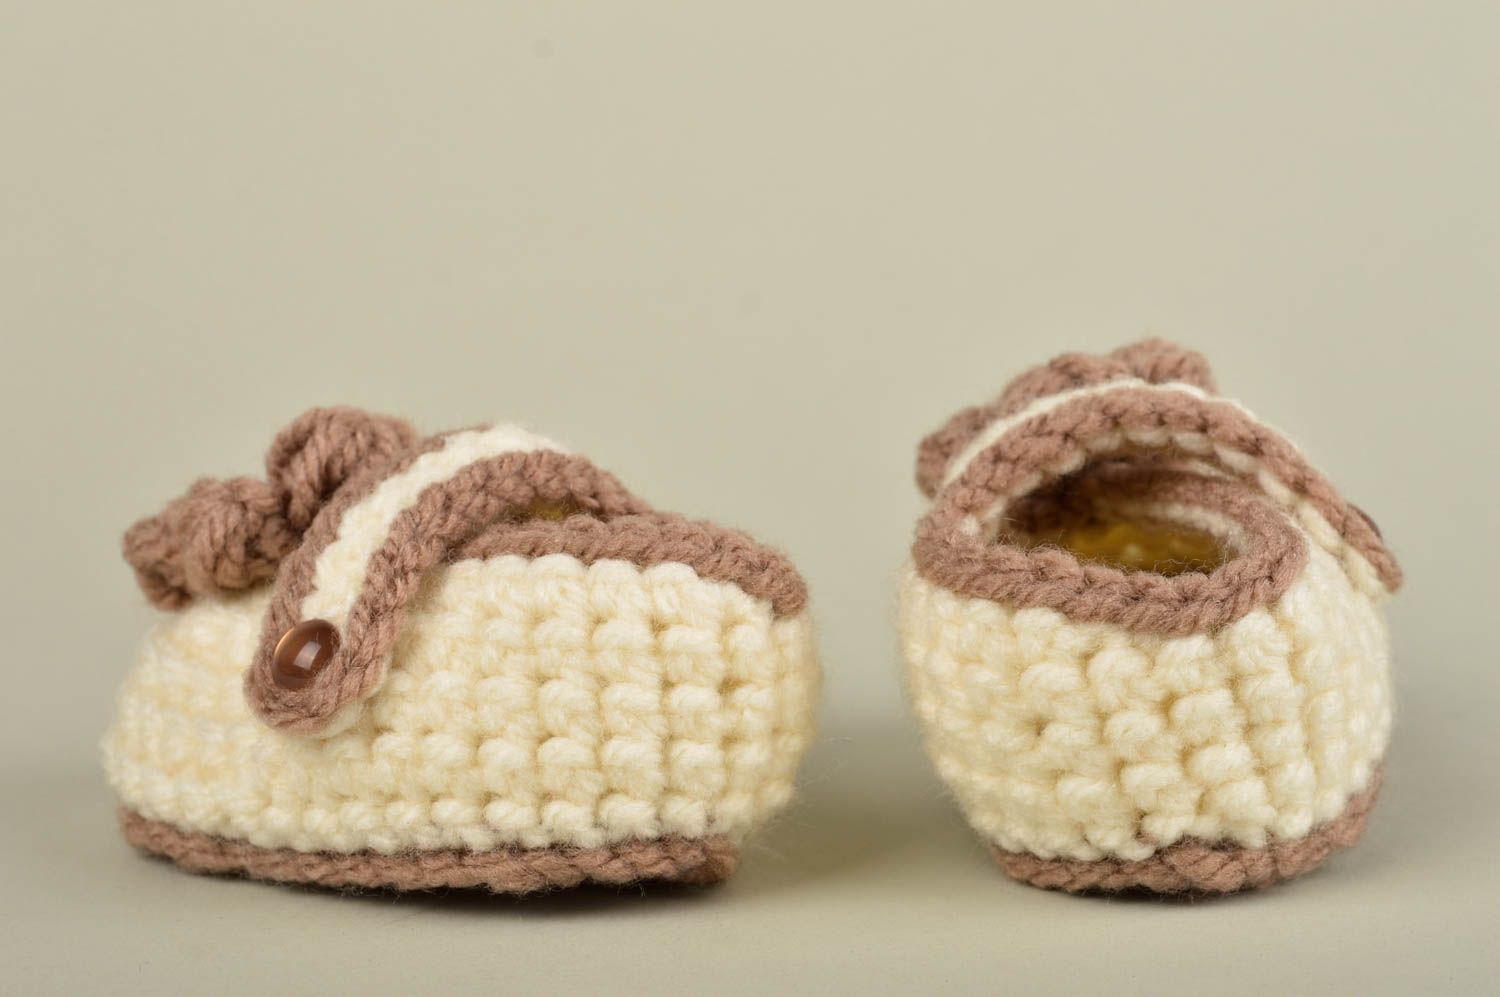 Hand-crocheted baby booties for newborn children handmade socks for babies photo 4